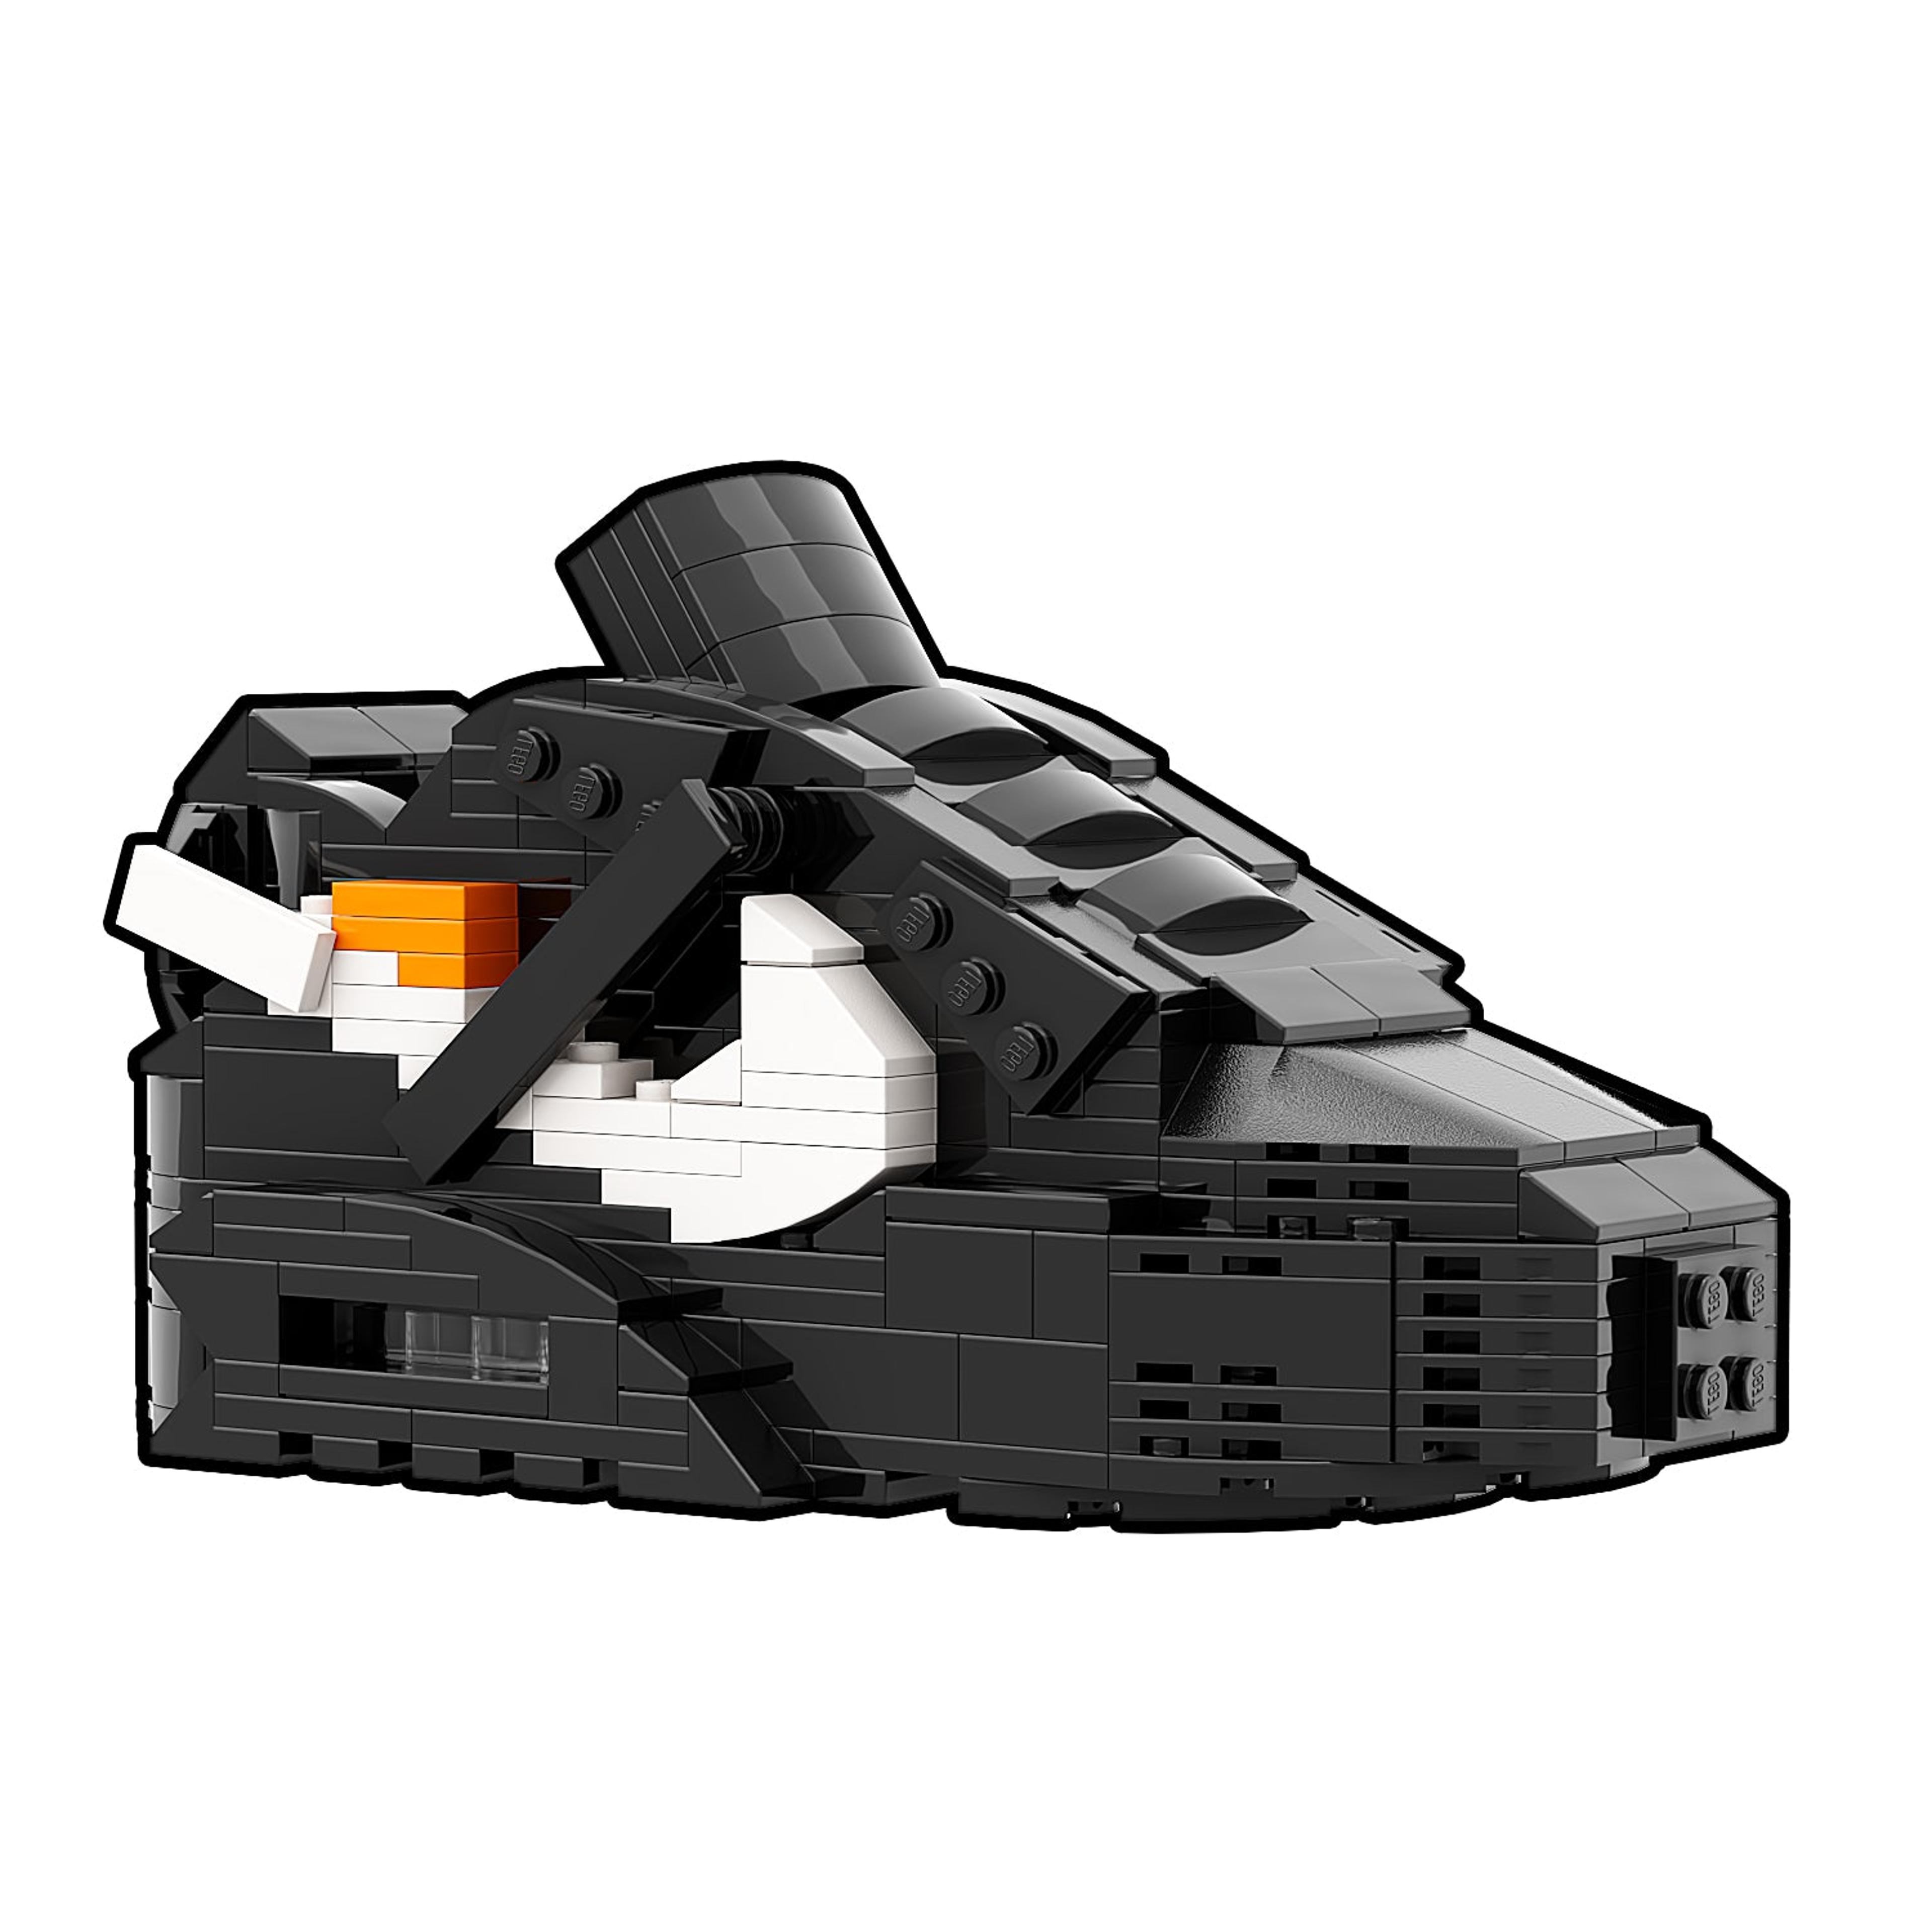 Alternate View 6 of REGULAR Air Max 90 "Off-White Black" Sneaker Bricks with Mini Fi